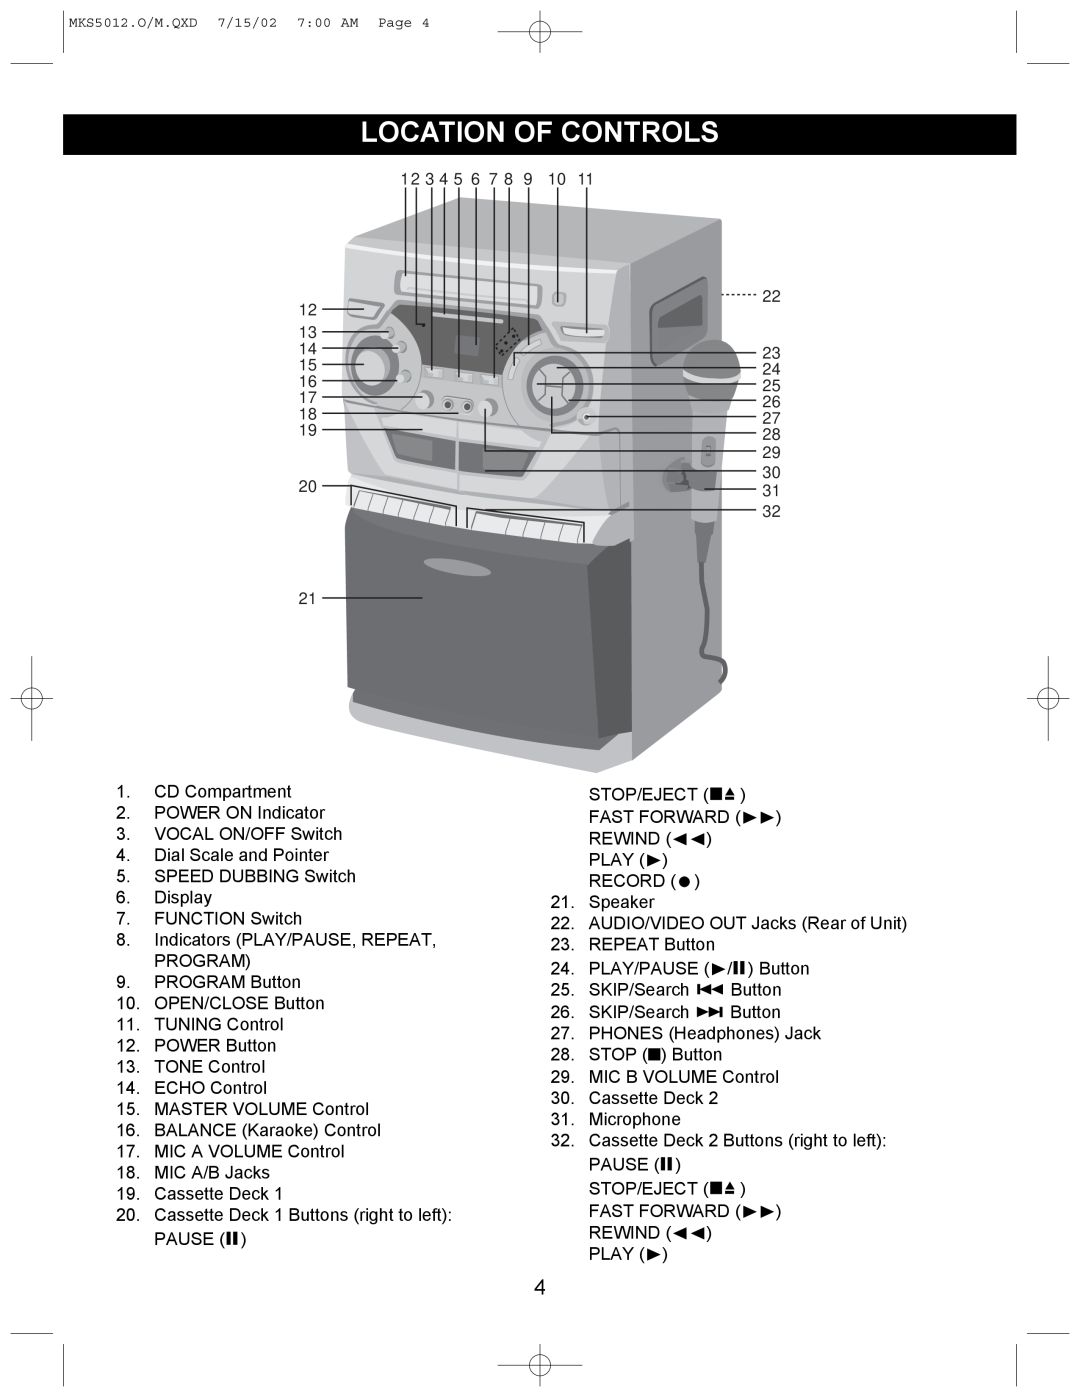 Memorex MKS5012 manual Location Of Controls 